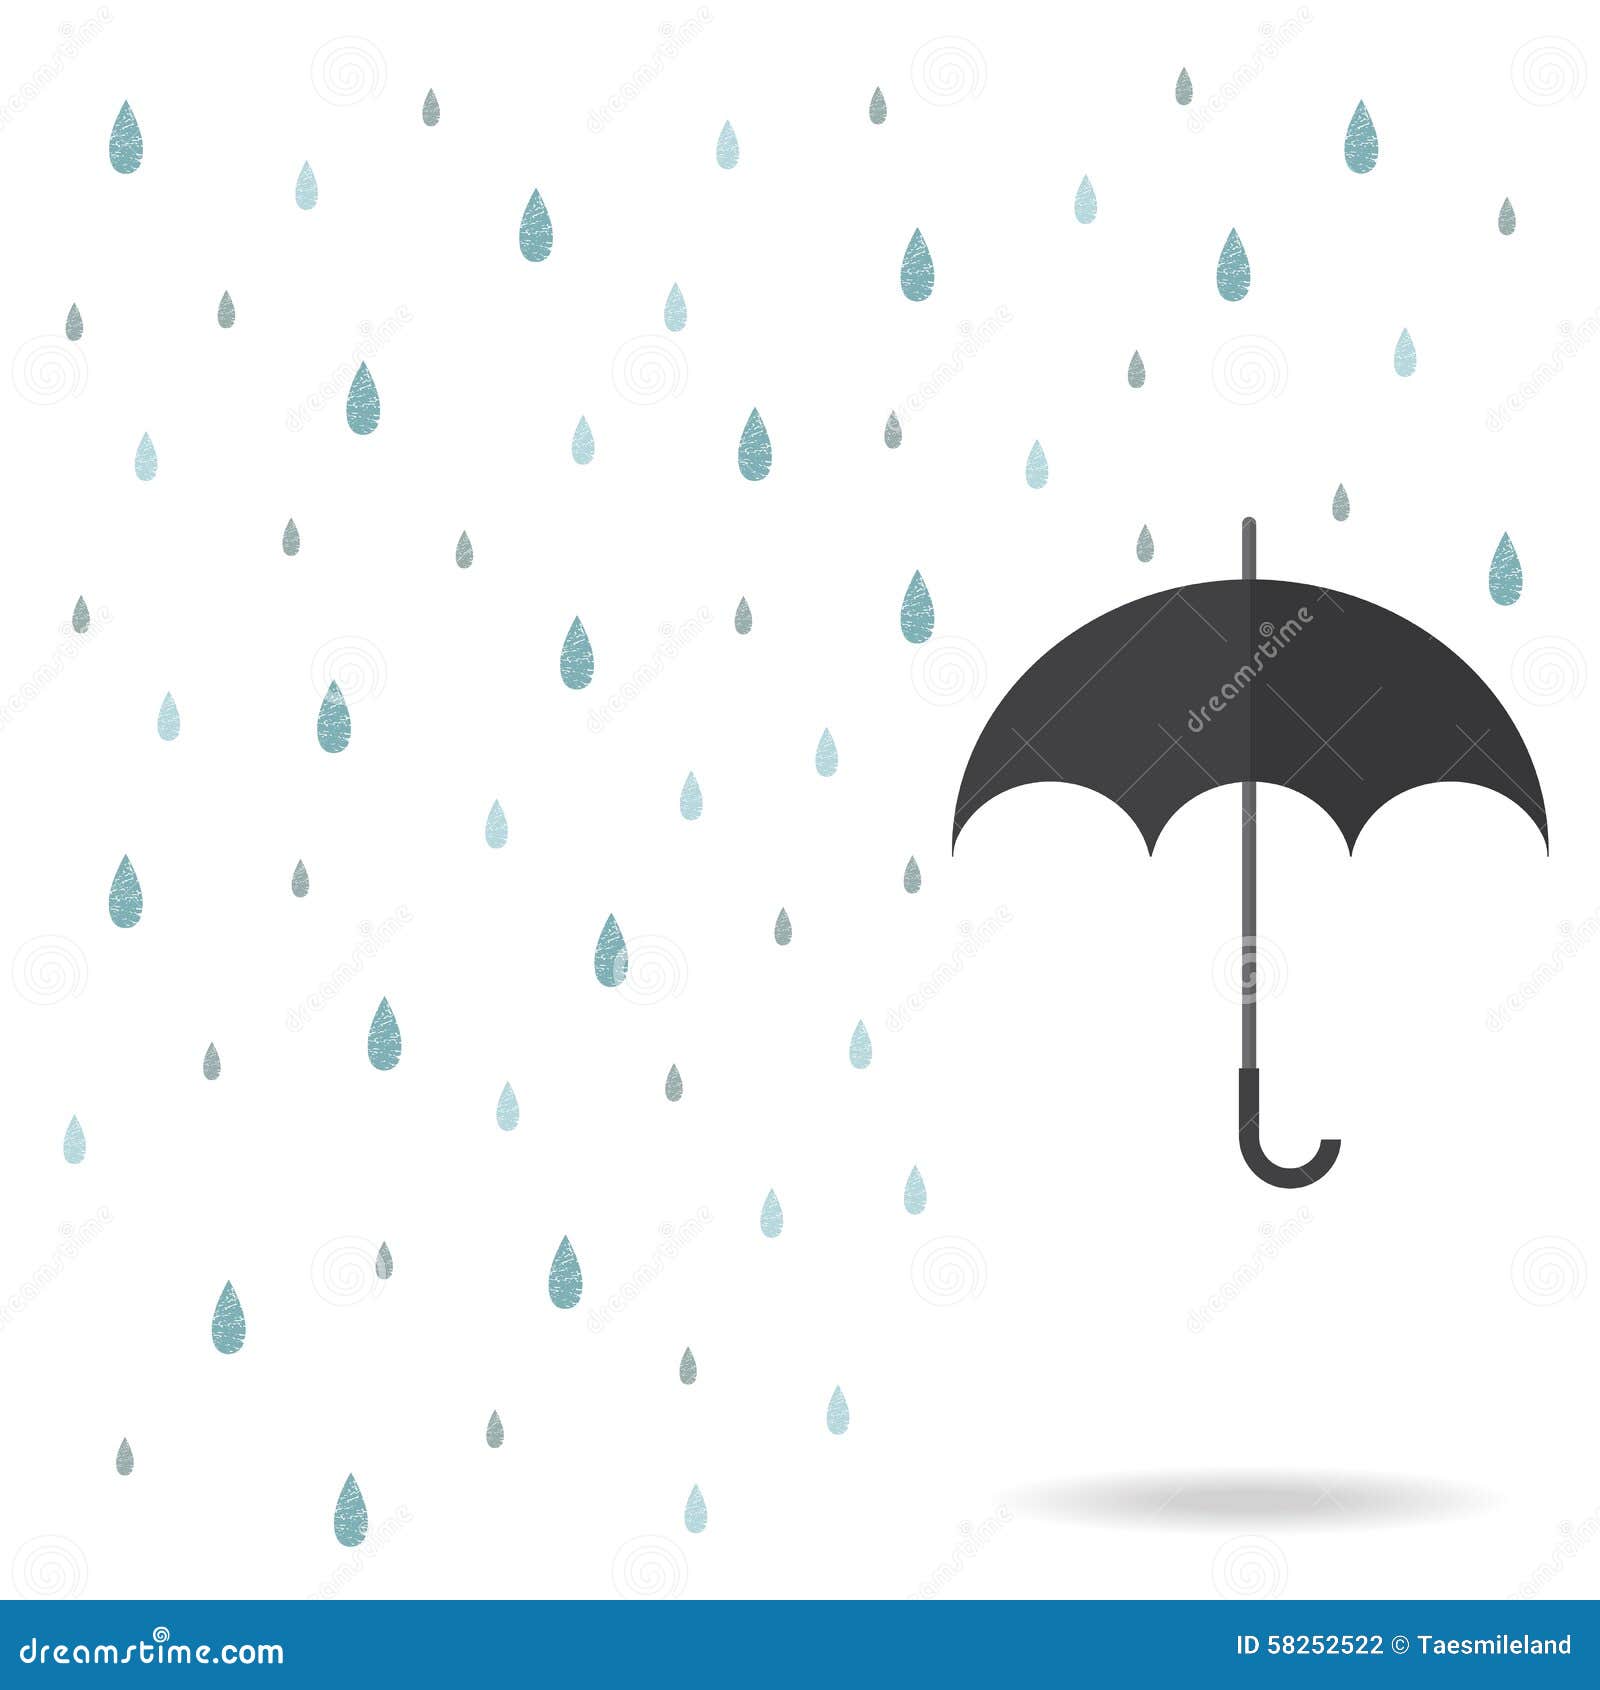 Raindrop background stock vector. Illustration of simple - 58252522